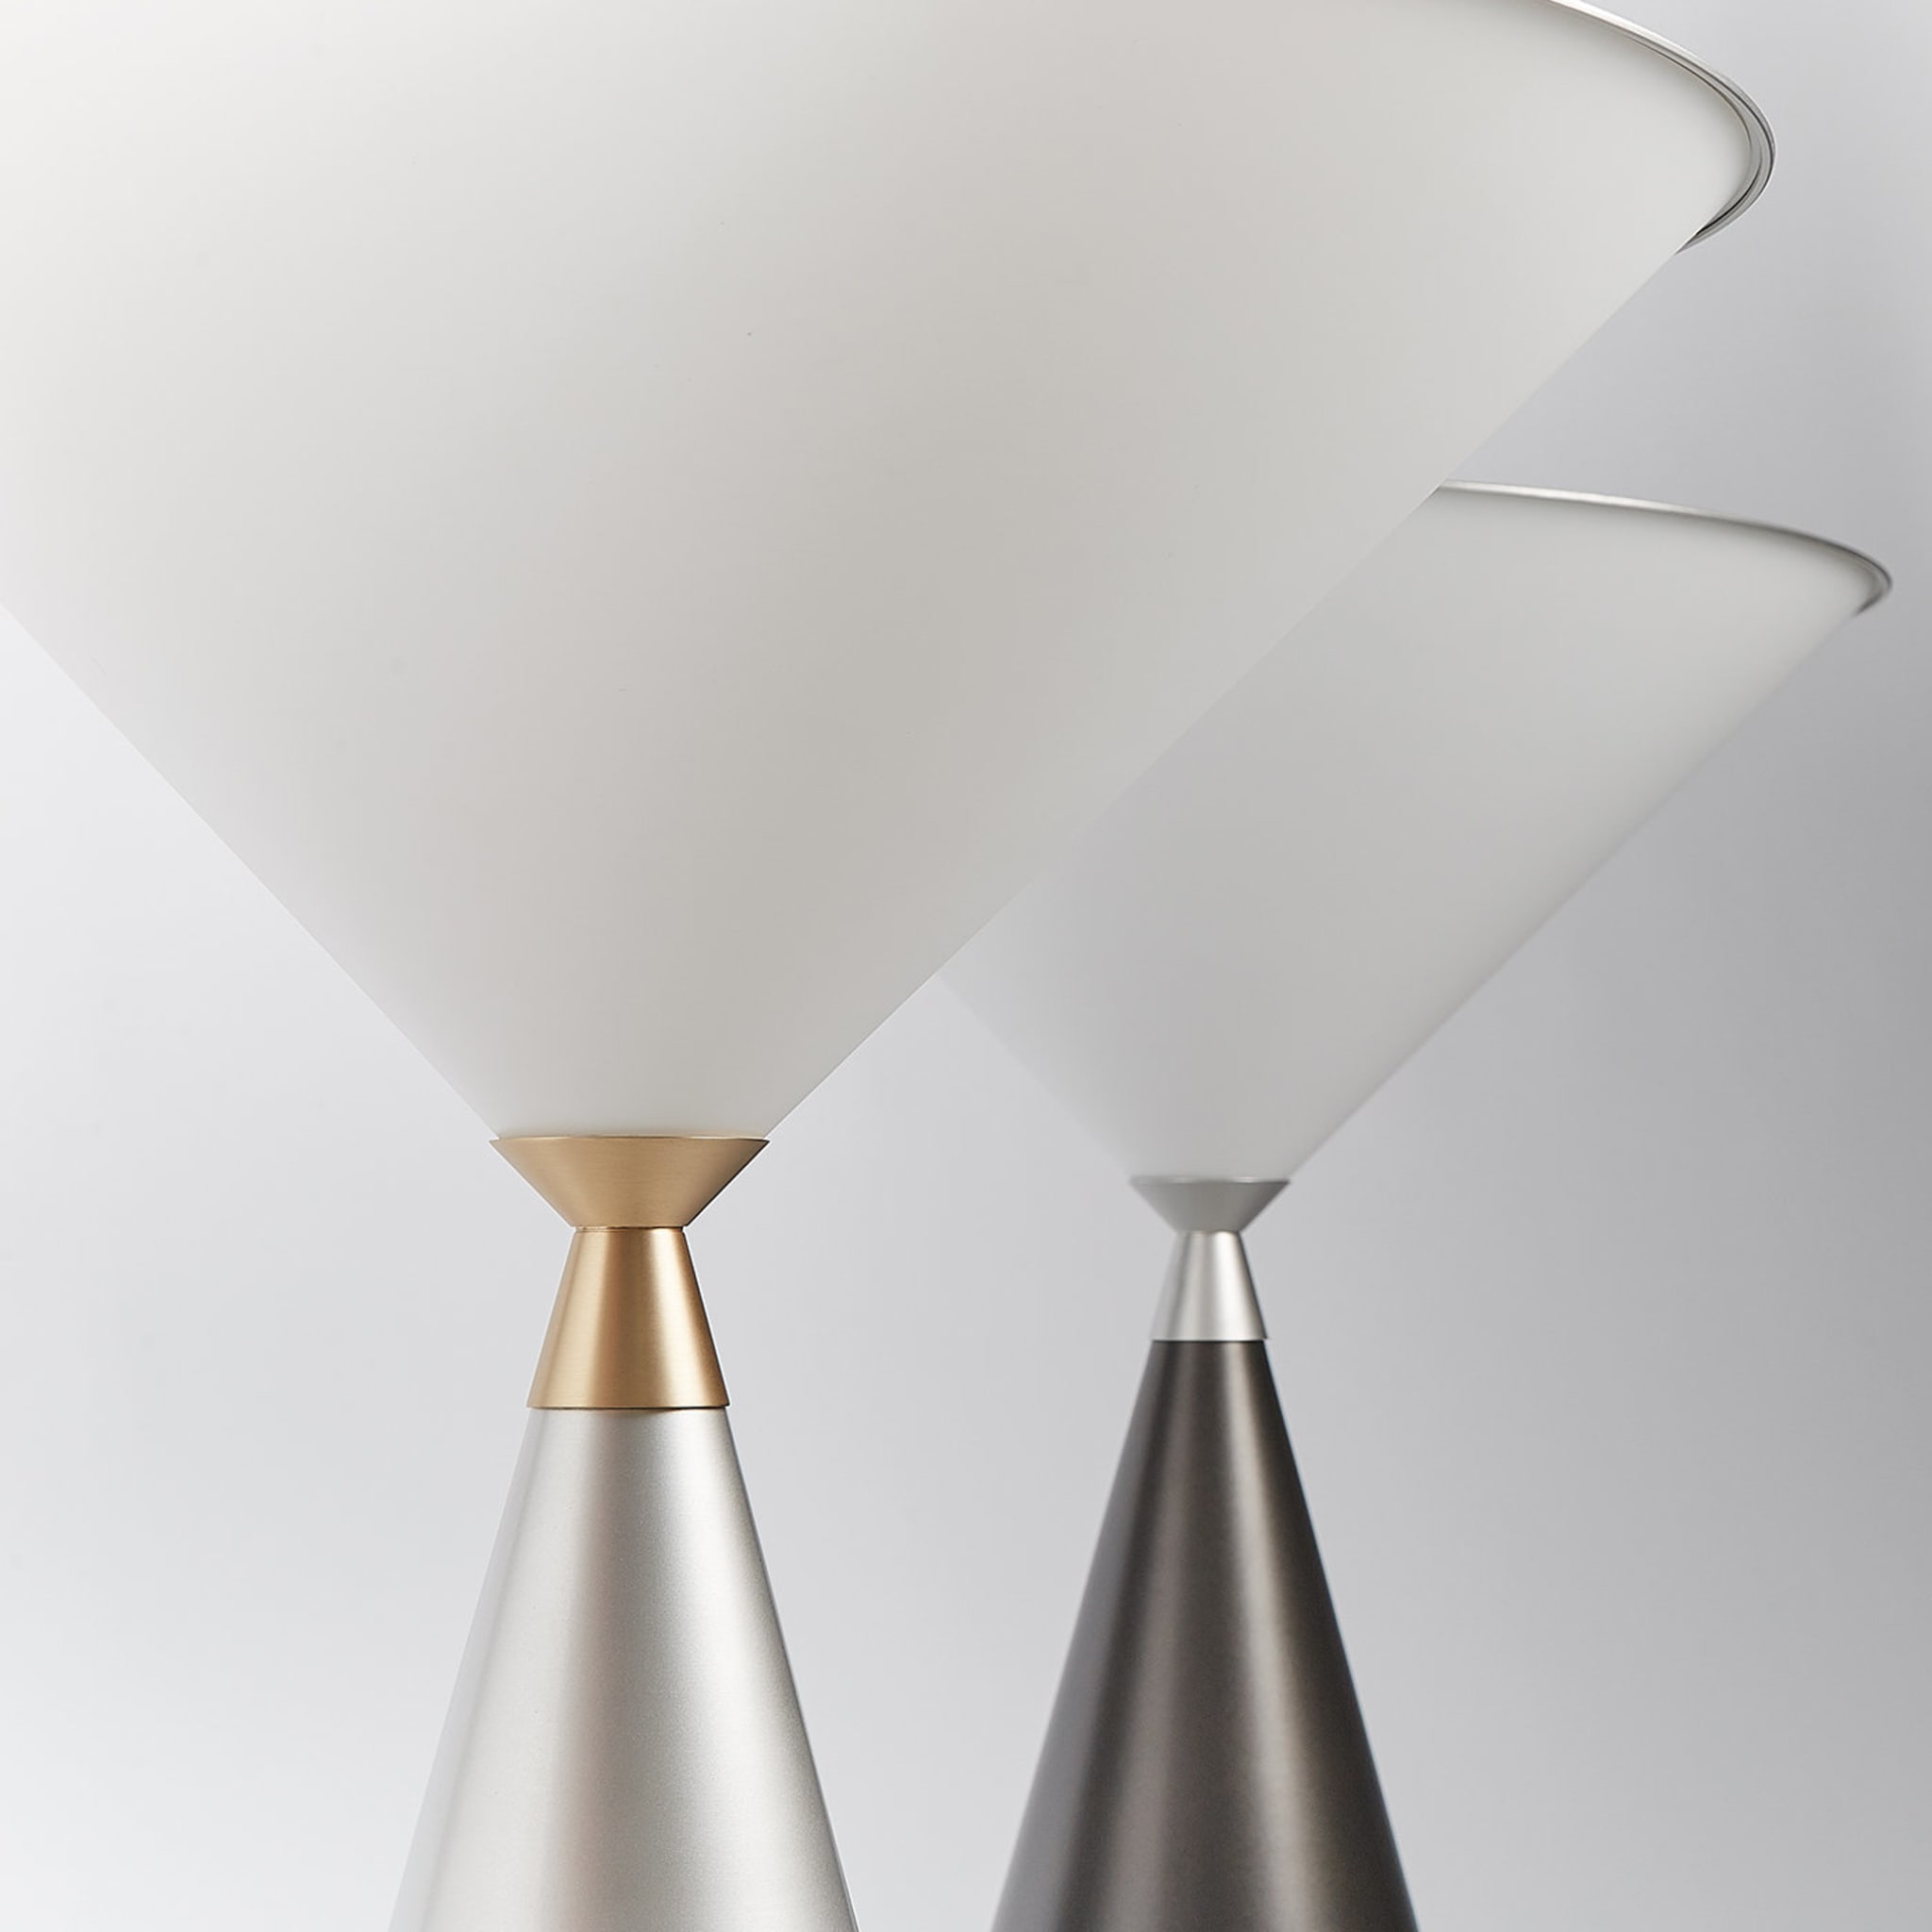 Icones Table Lamp by Lorenza Bozzoli - Alternative view 2